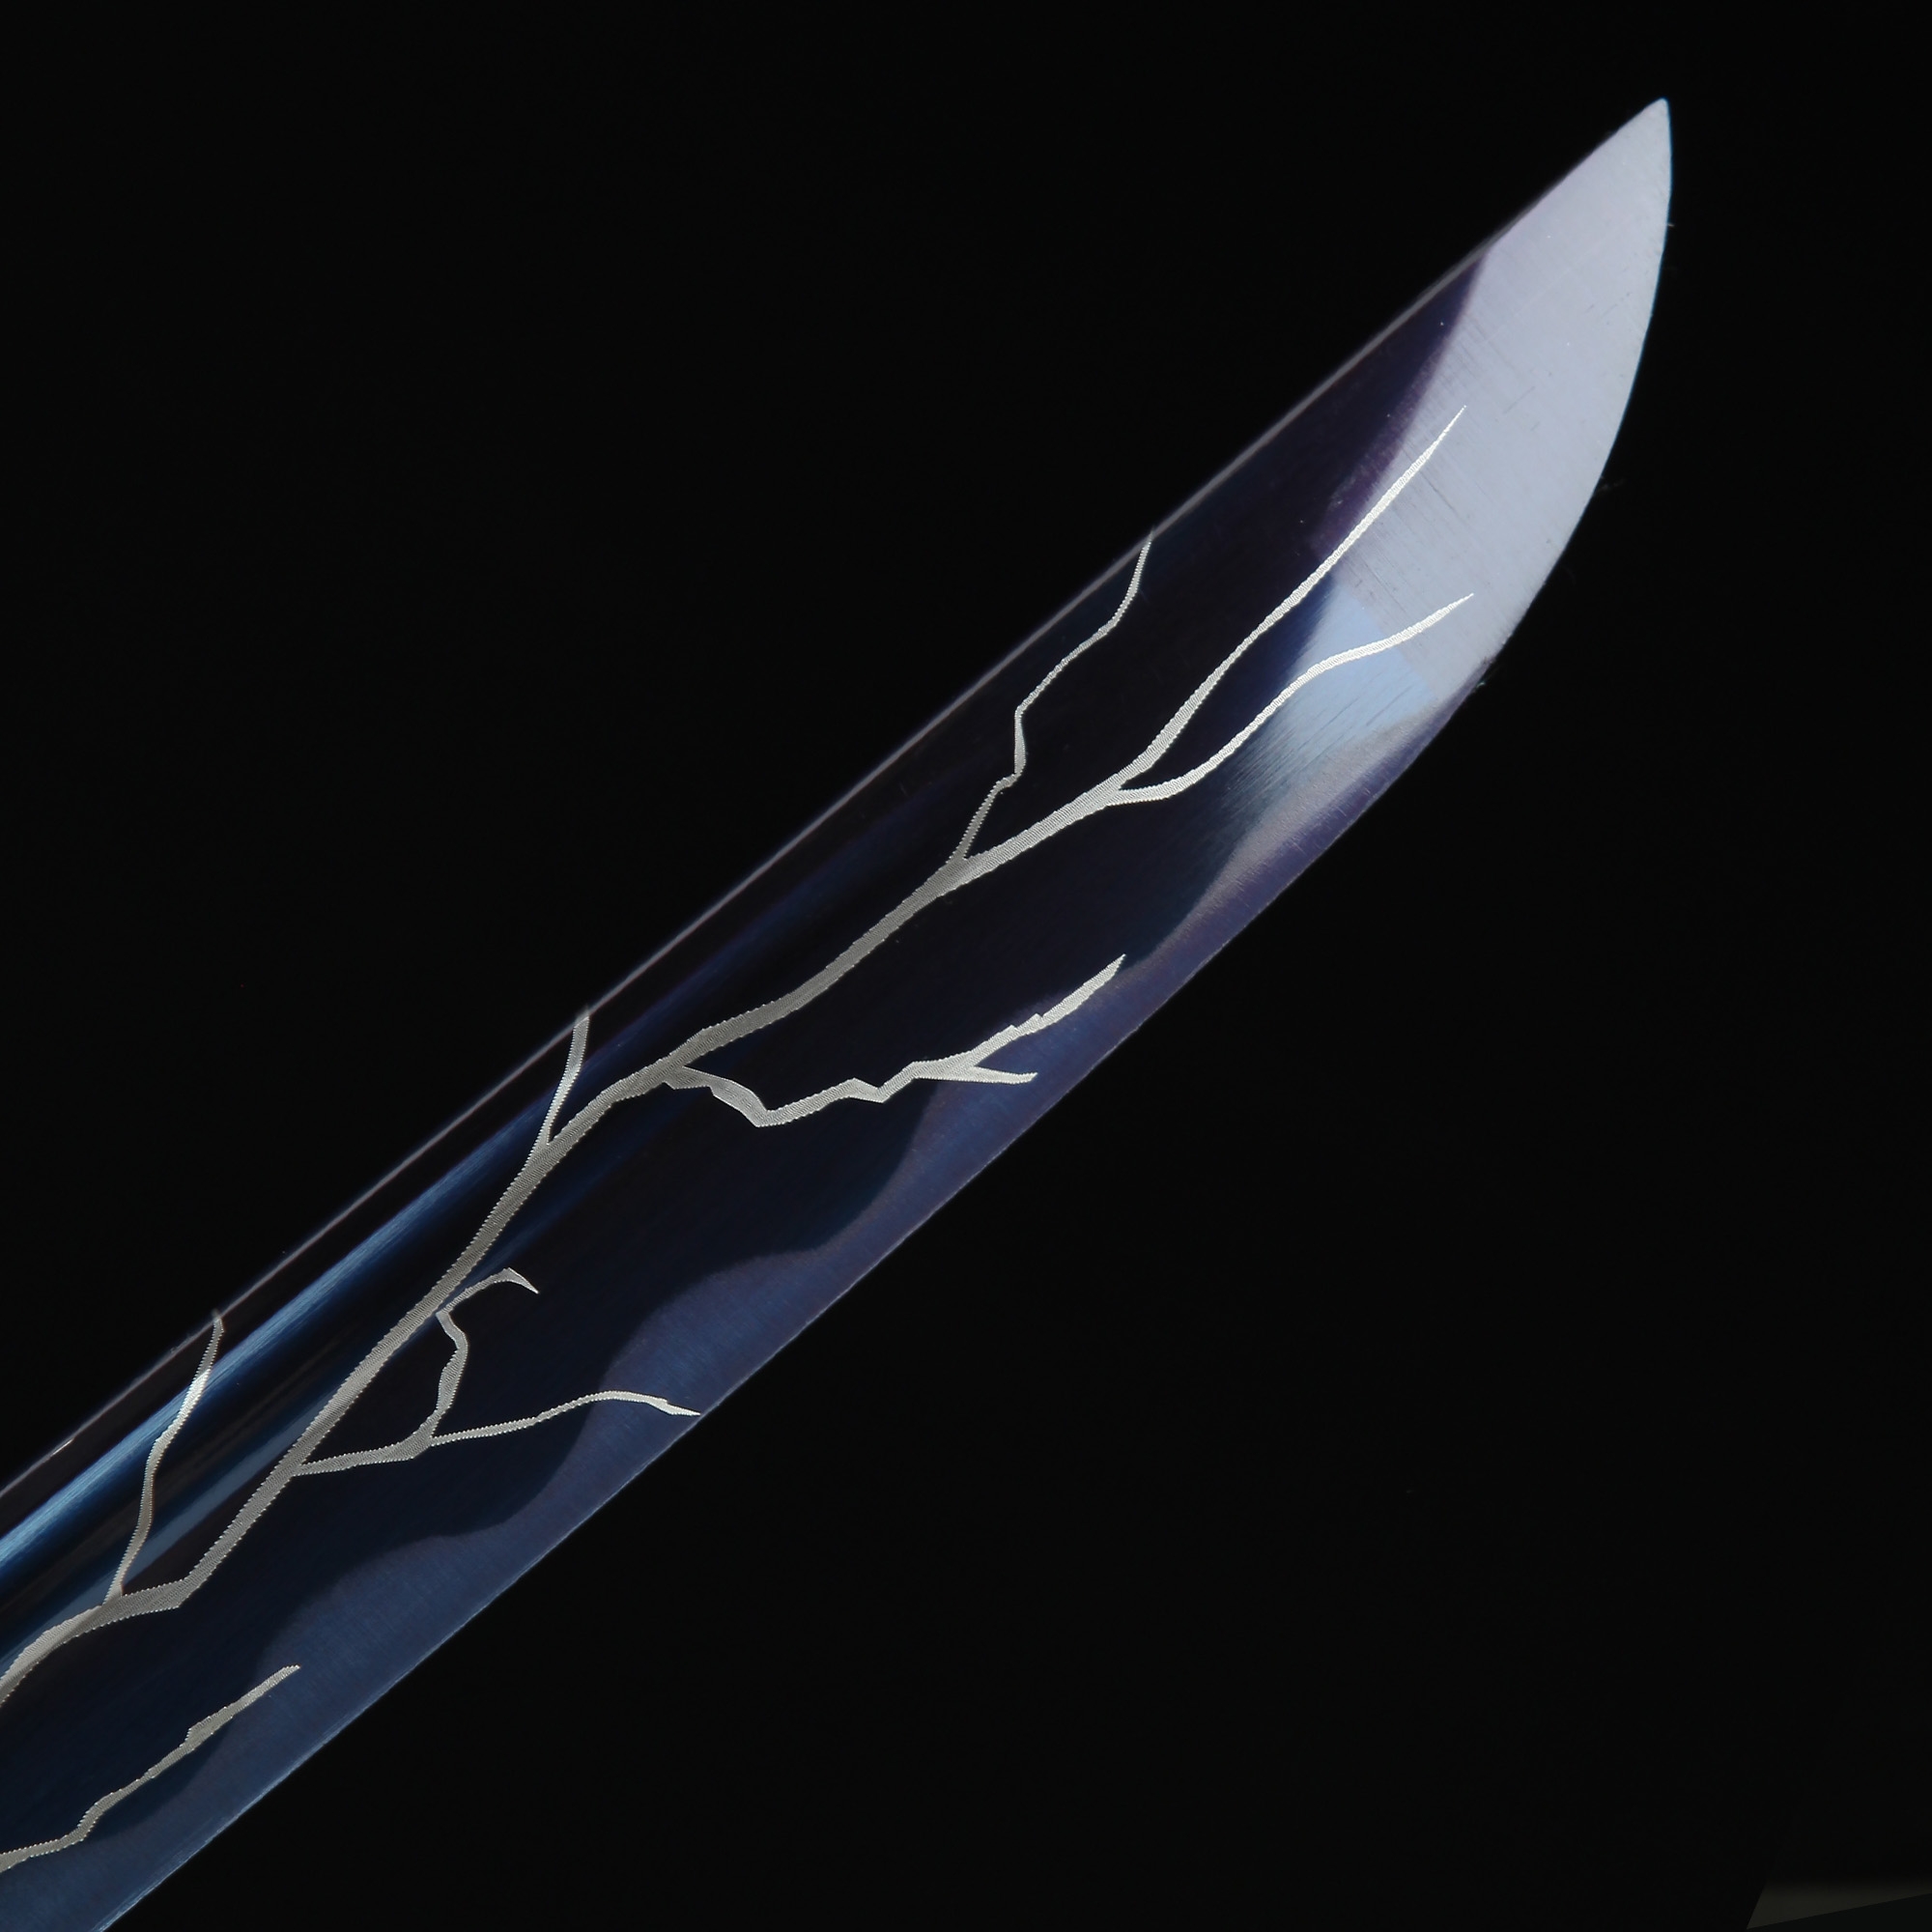 Blue Katana Sword